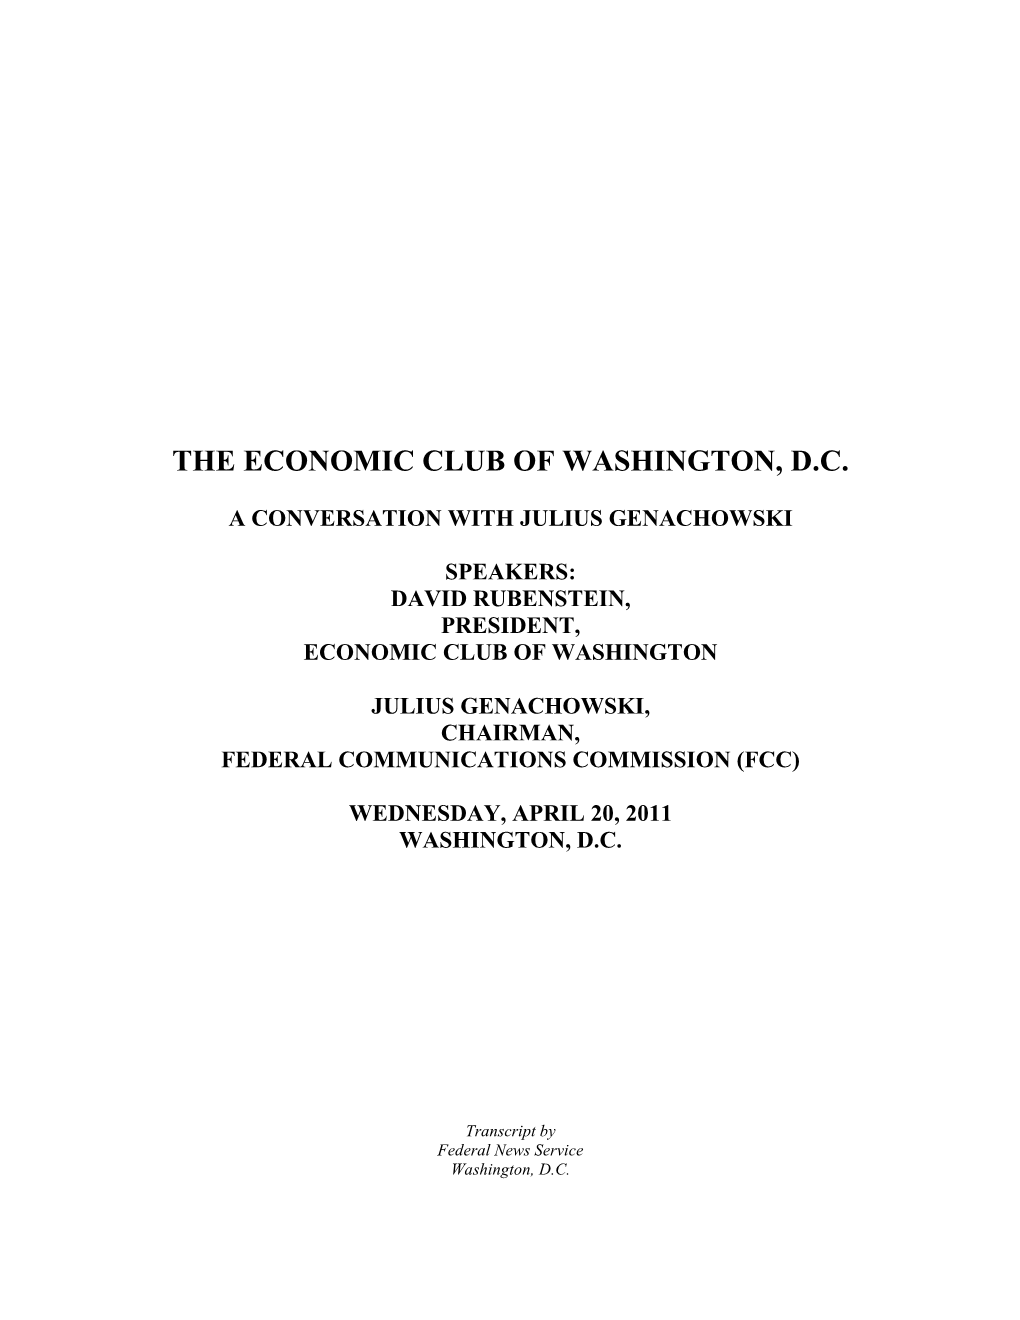 The Economic Club of Washington, D.C